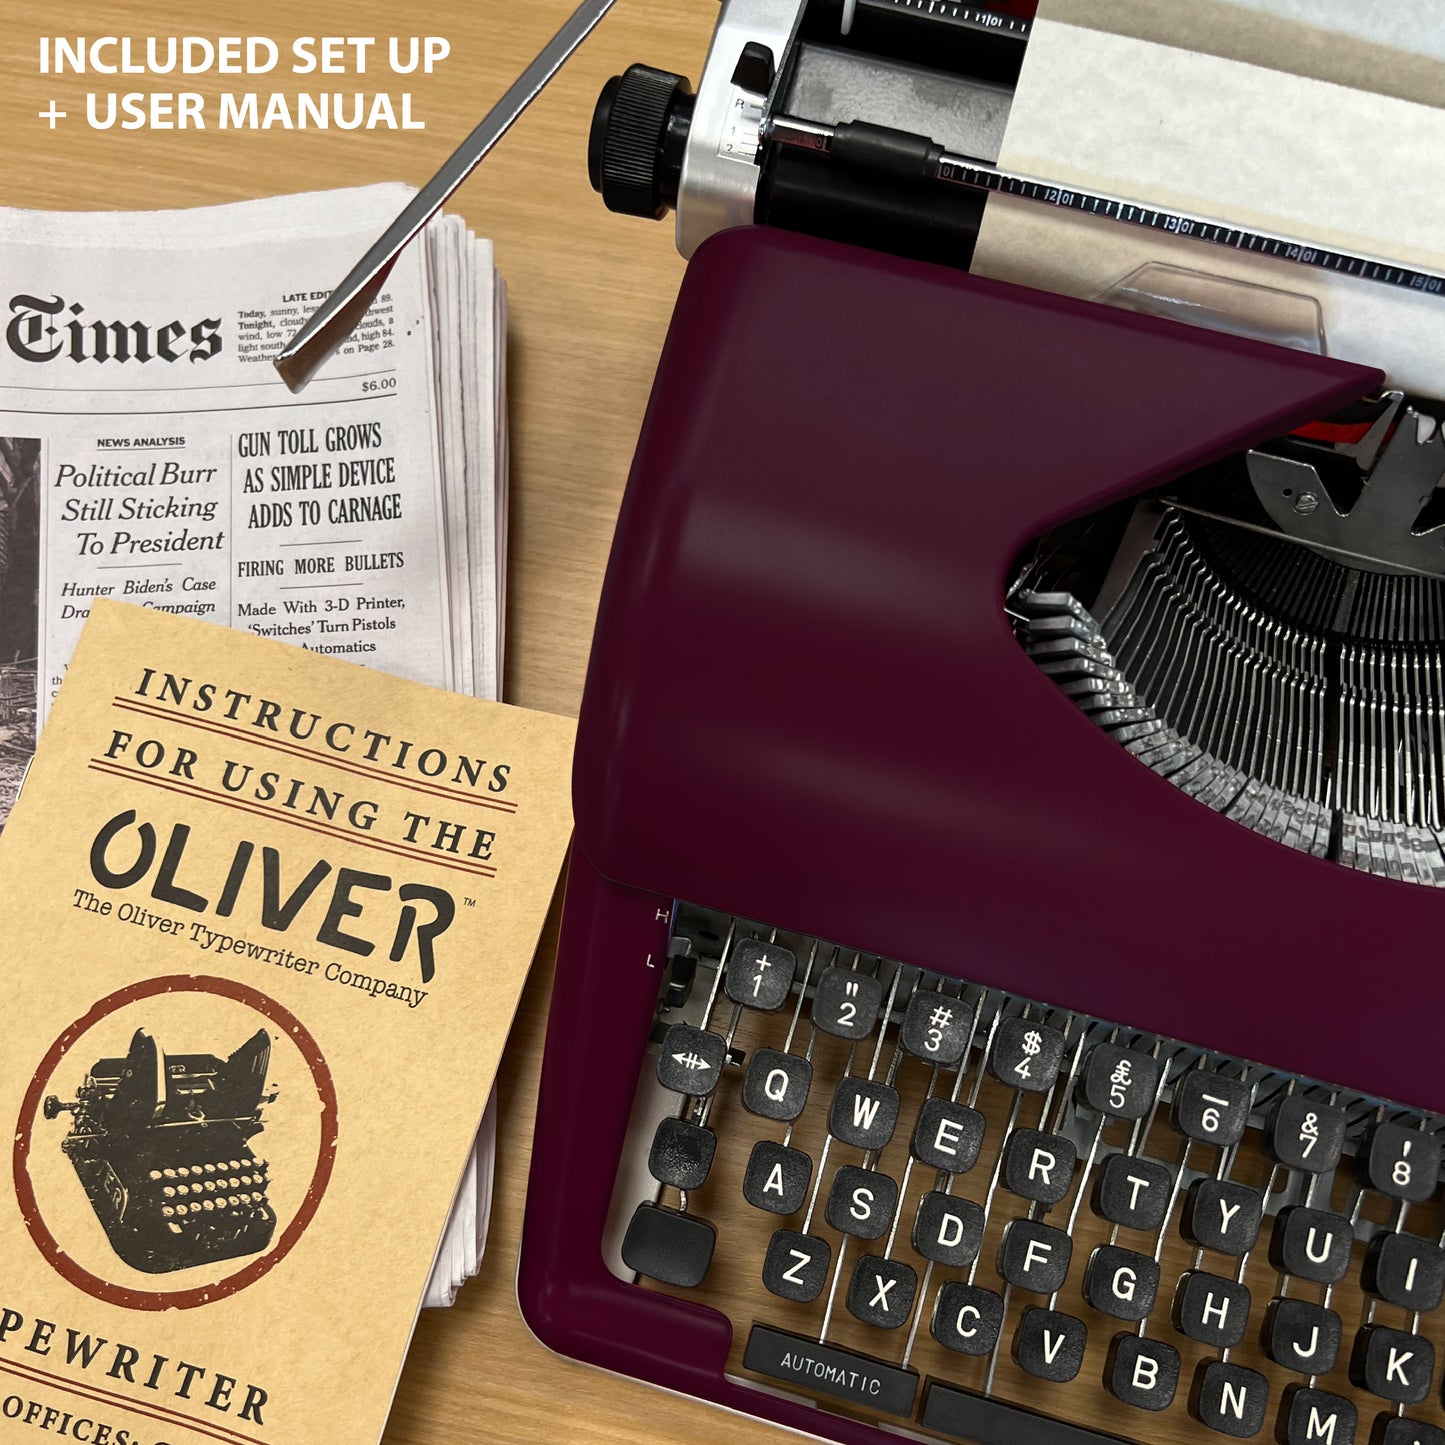 The Oliver Typewriter Company Legacy Manual Typewriter, Burgundy